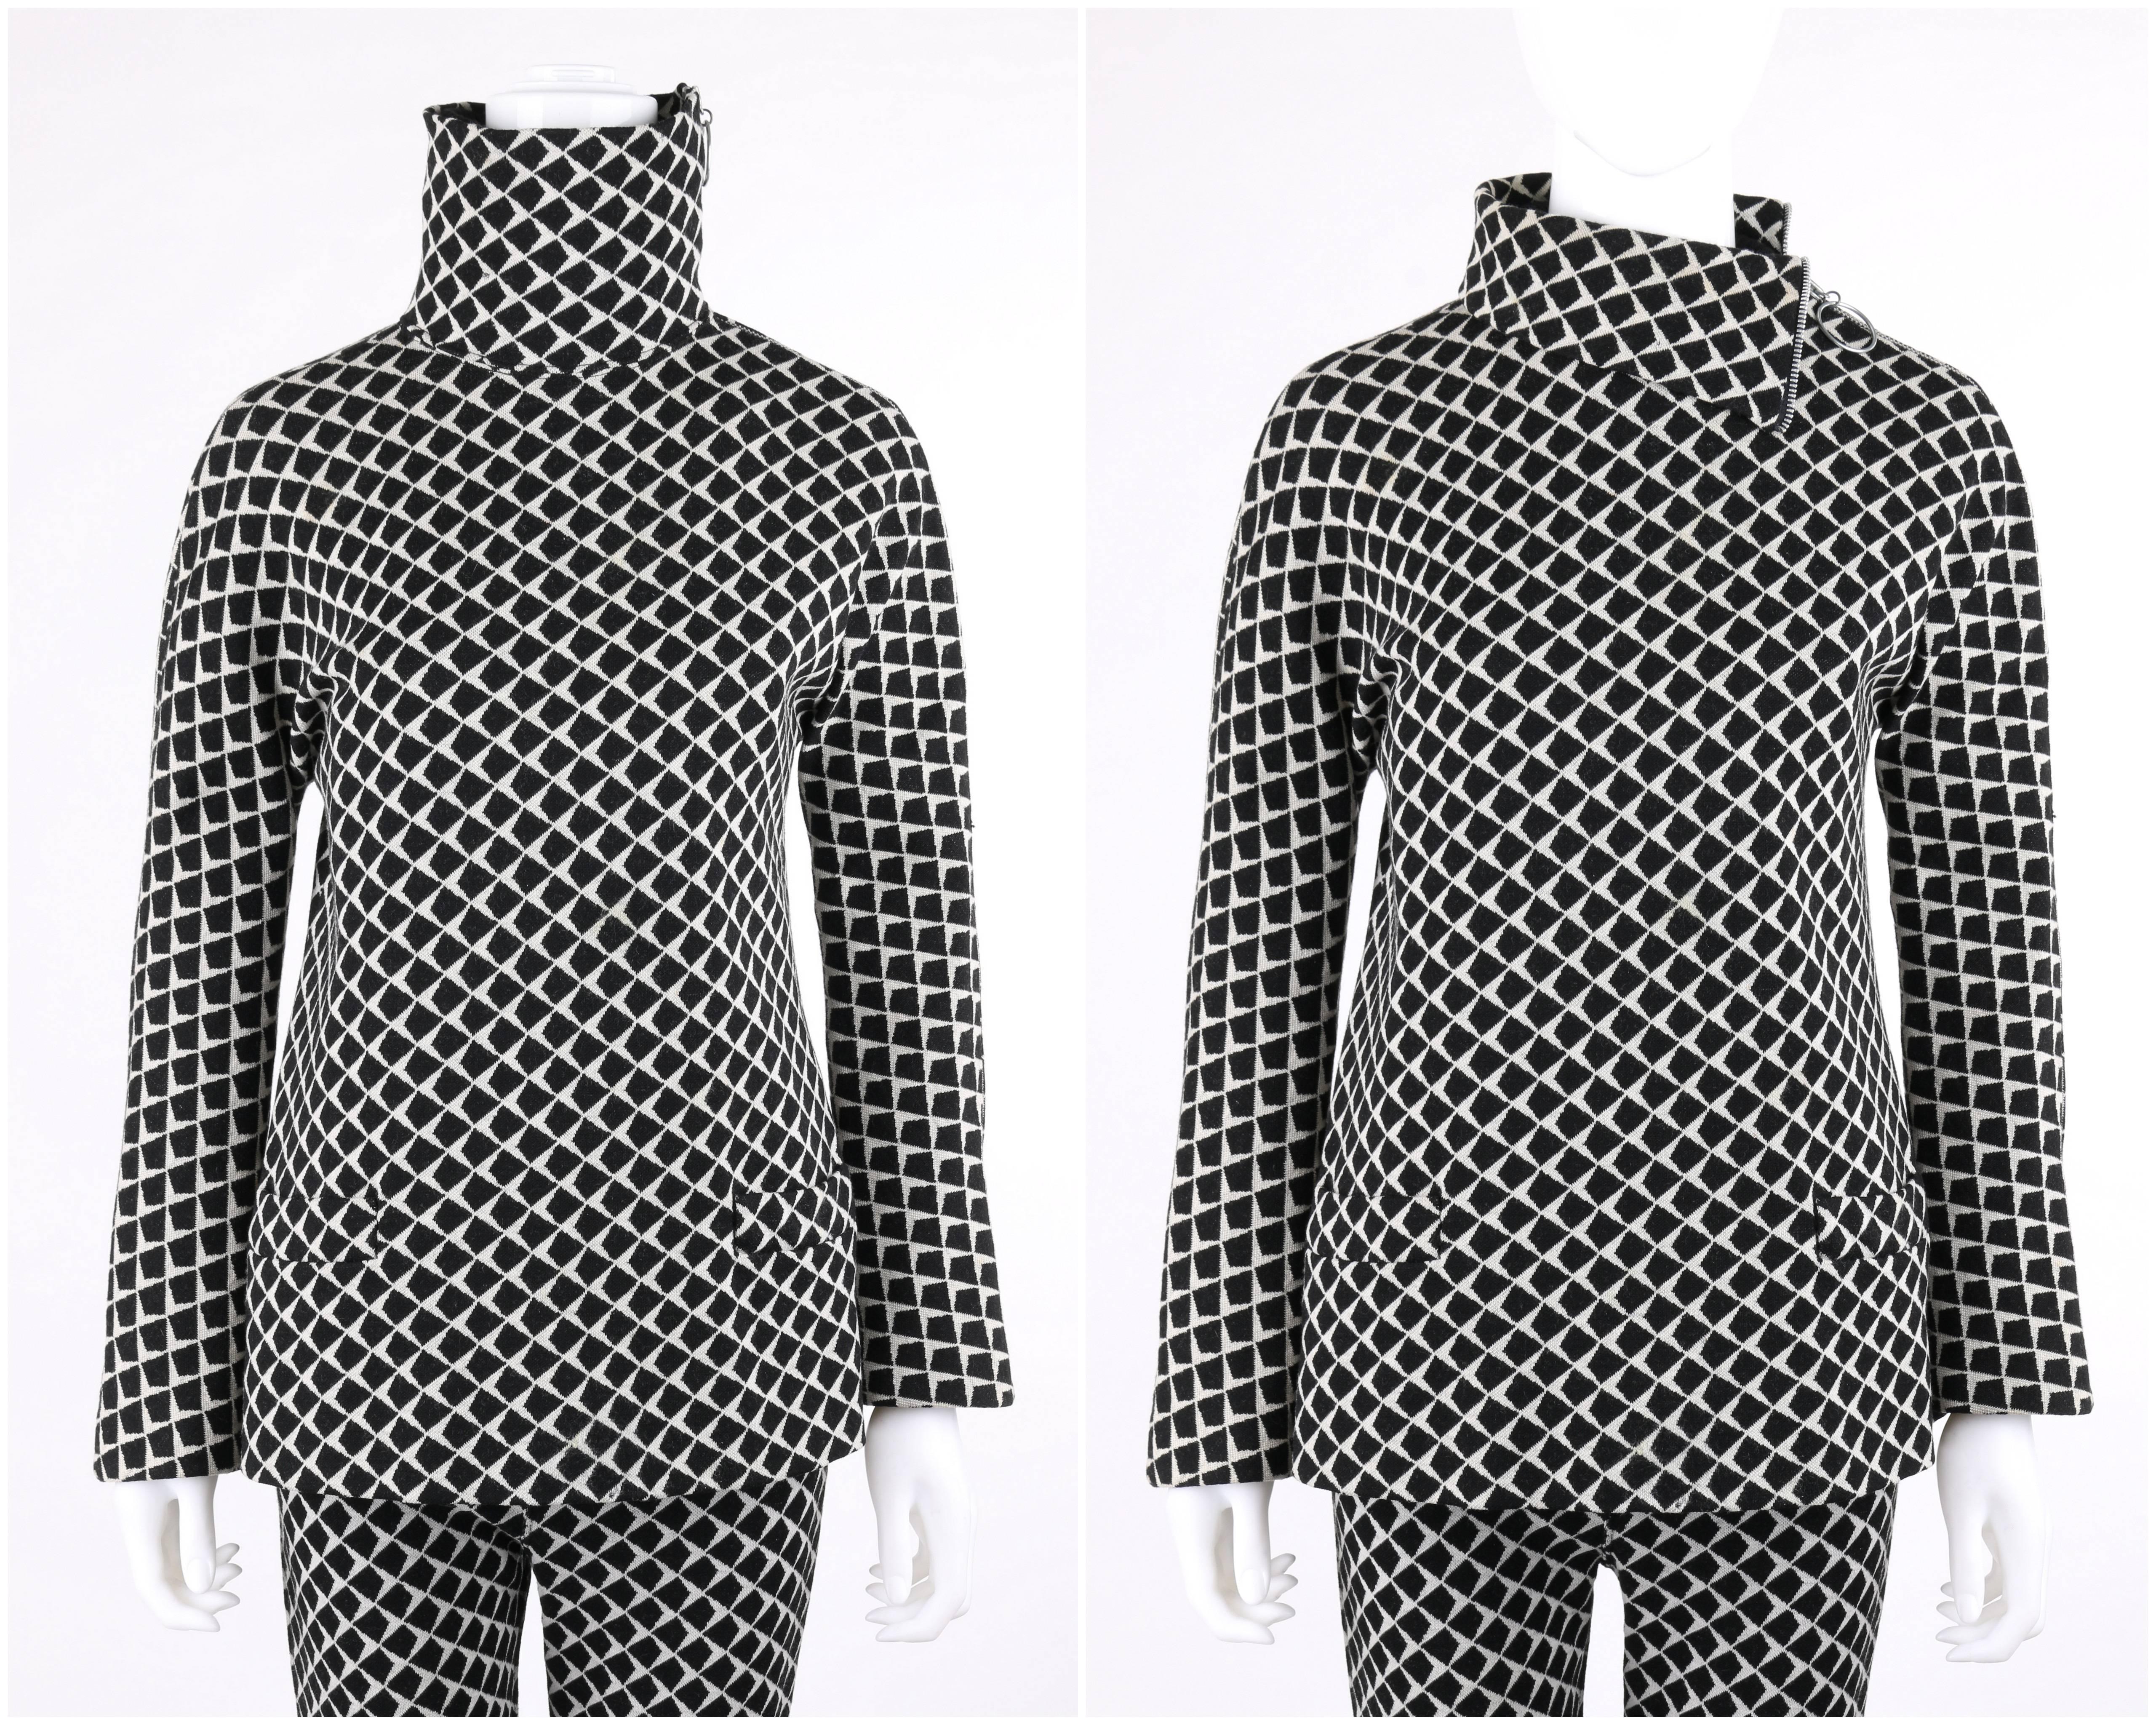 Black RUDI GERNREICH c.1960's 3 Piece Wool Mod Knitwear Jacket Sweater Pant Suit Set